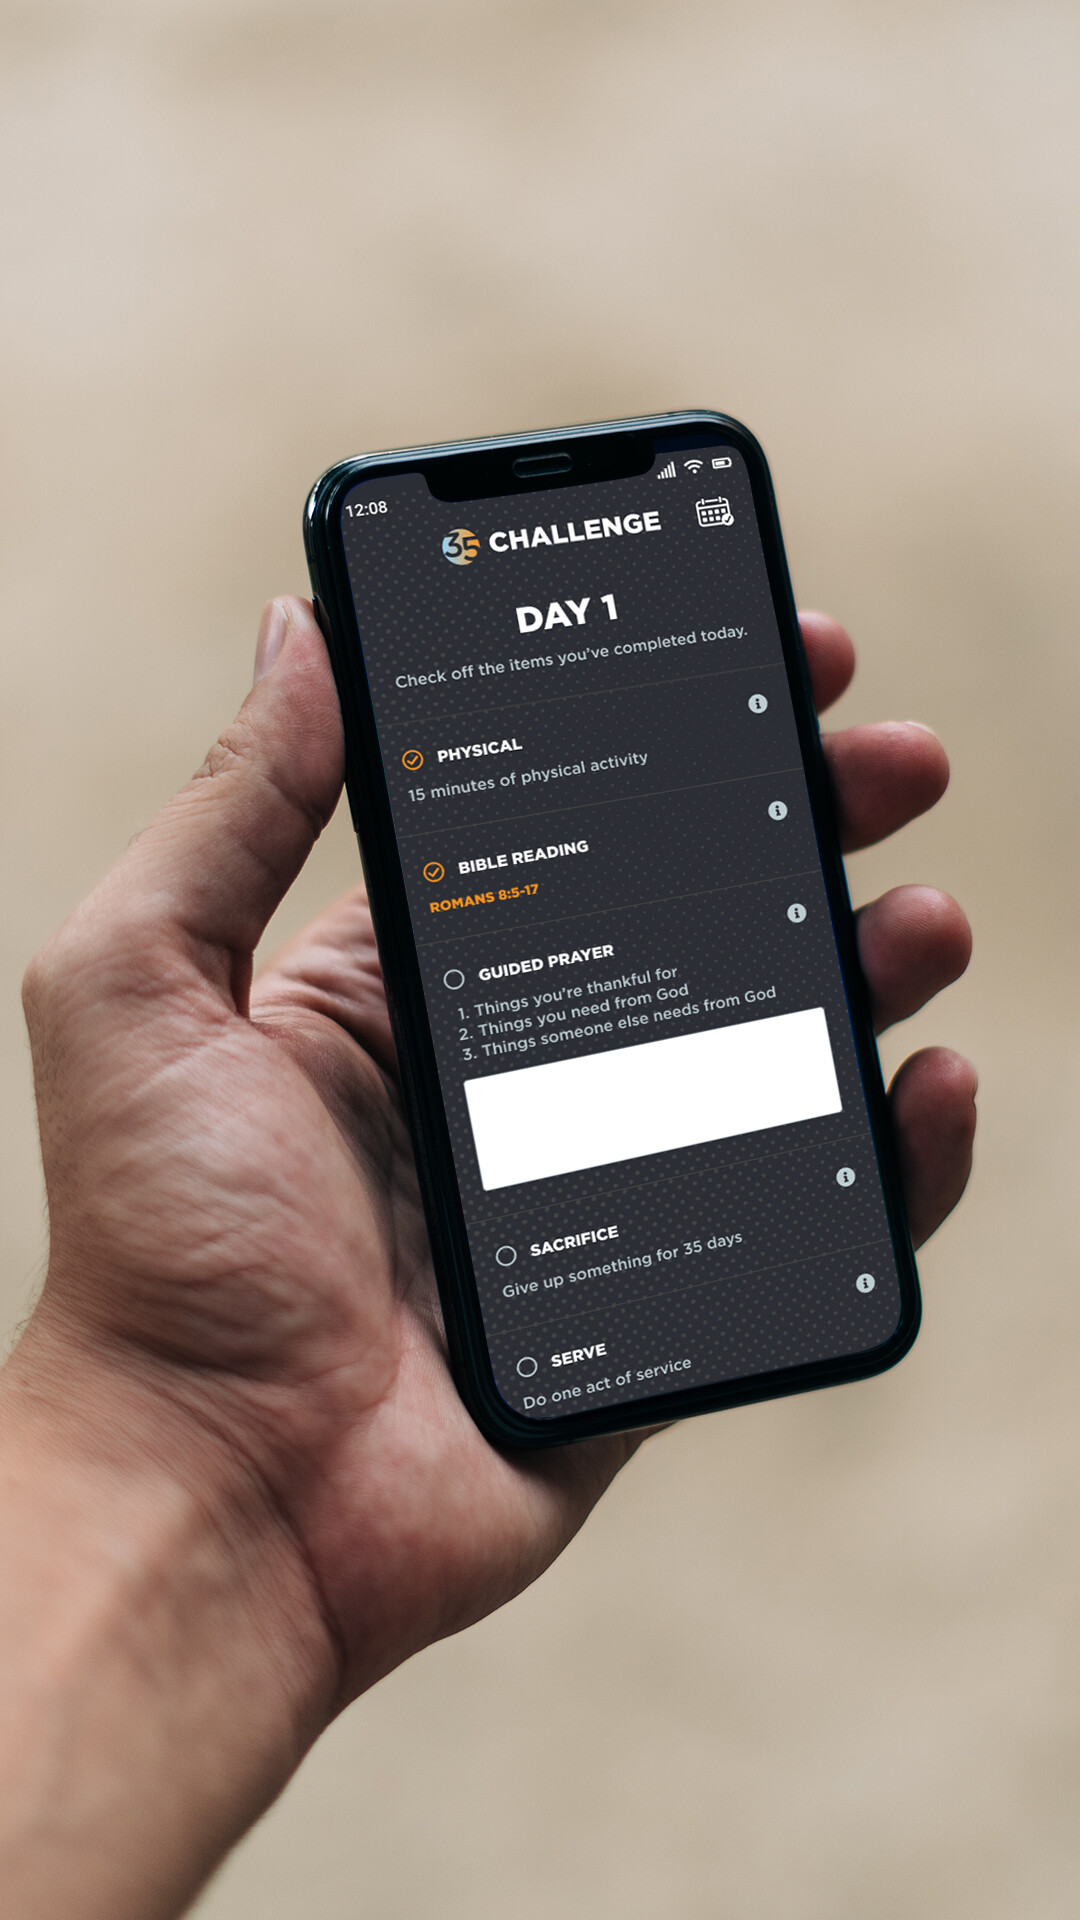 35 Day Challenge